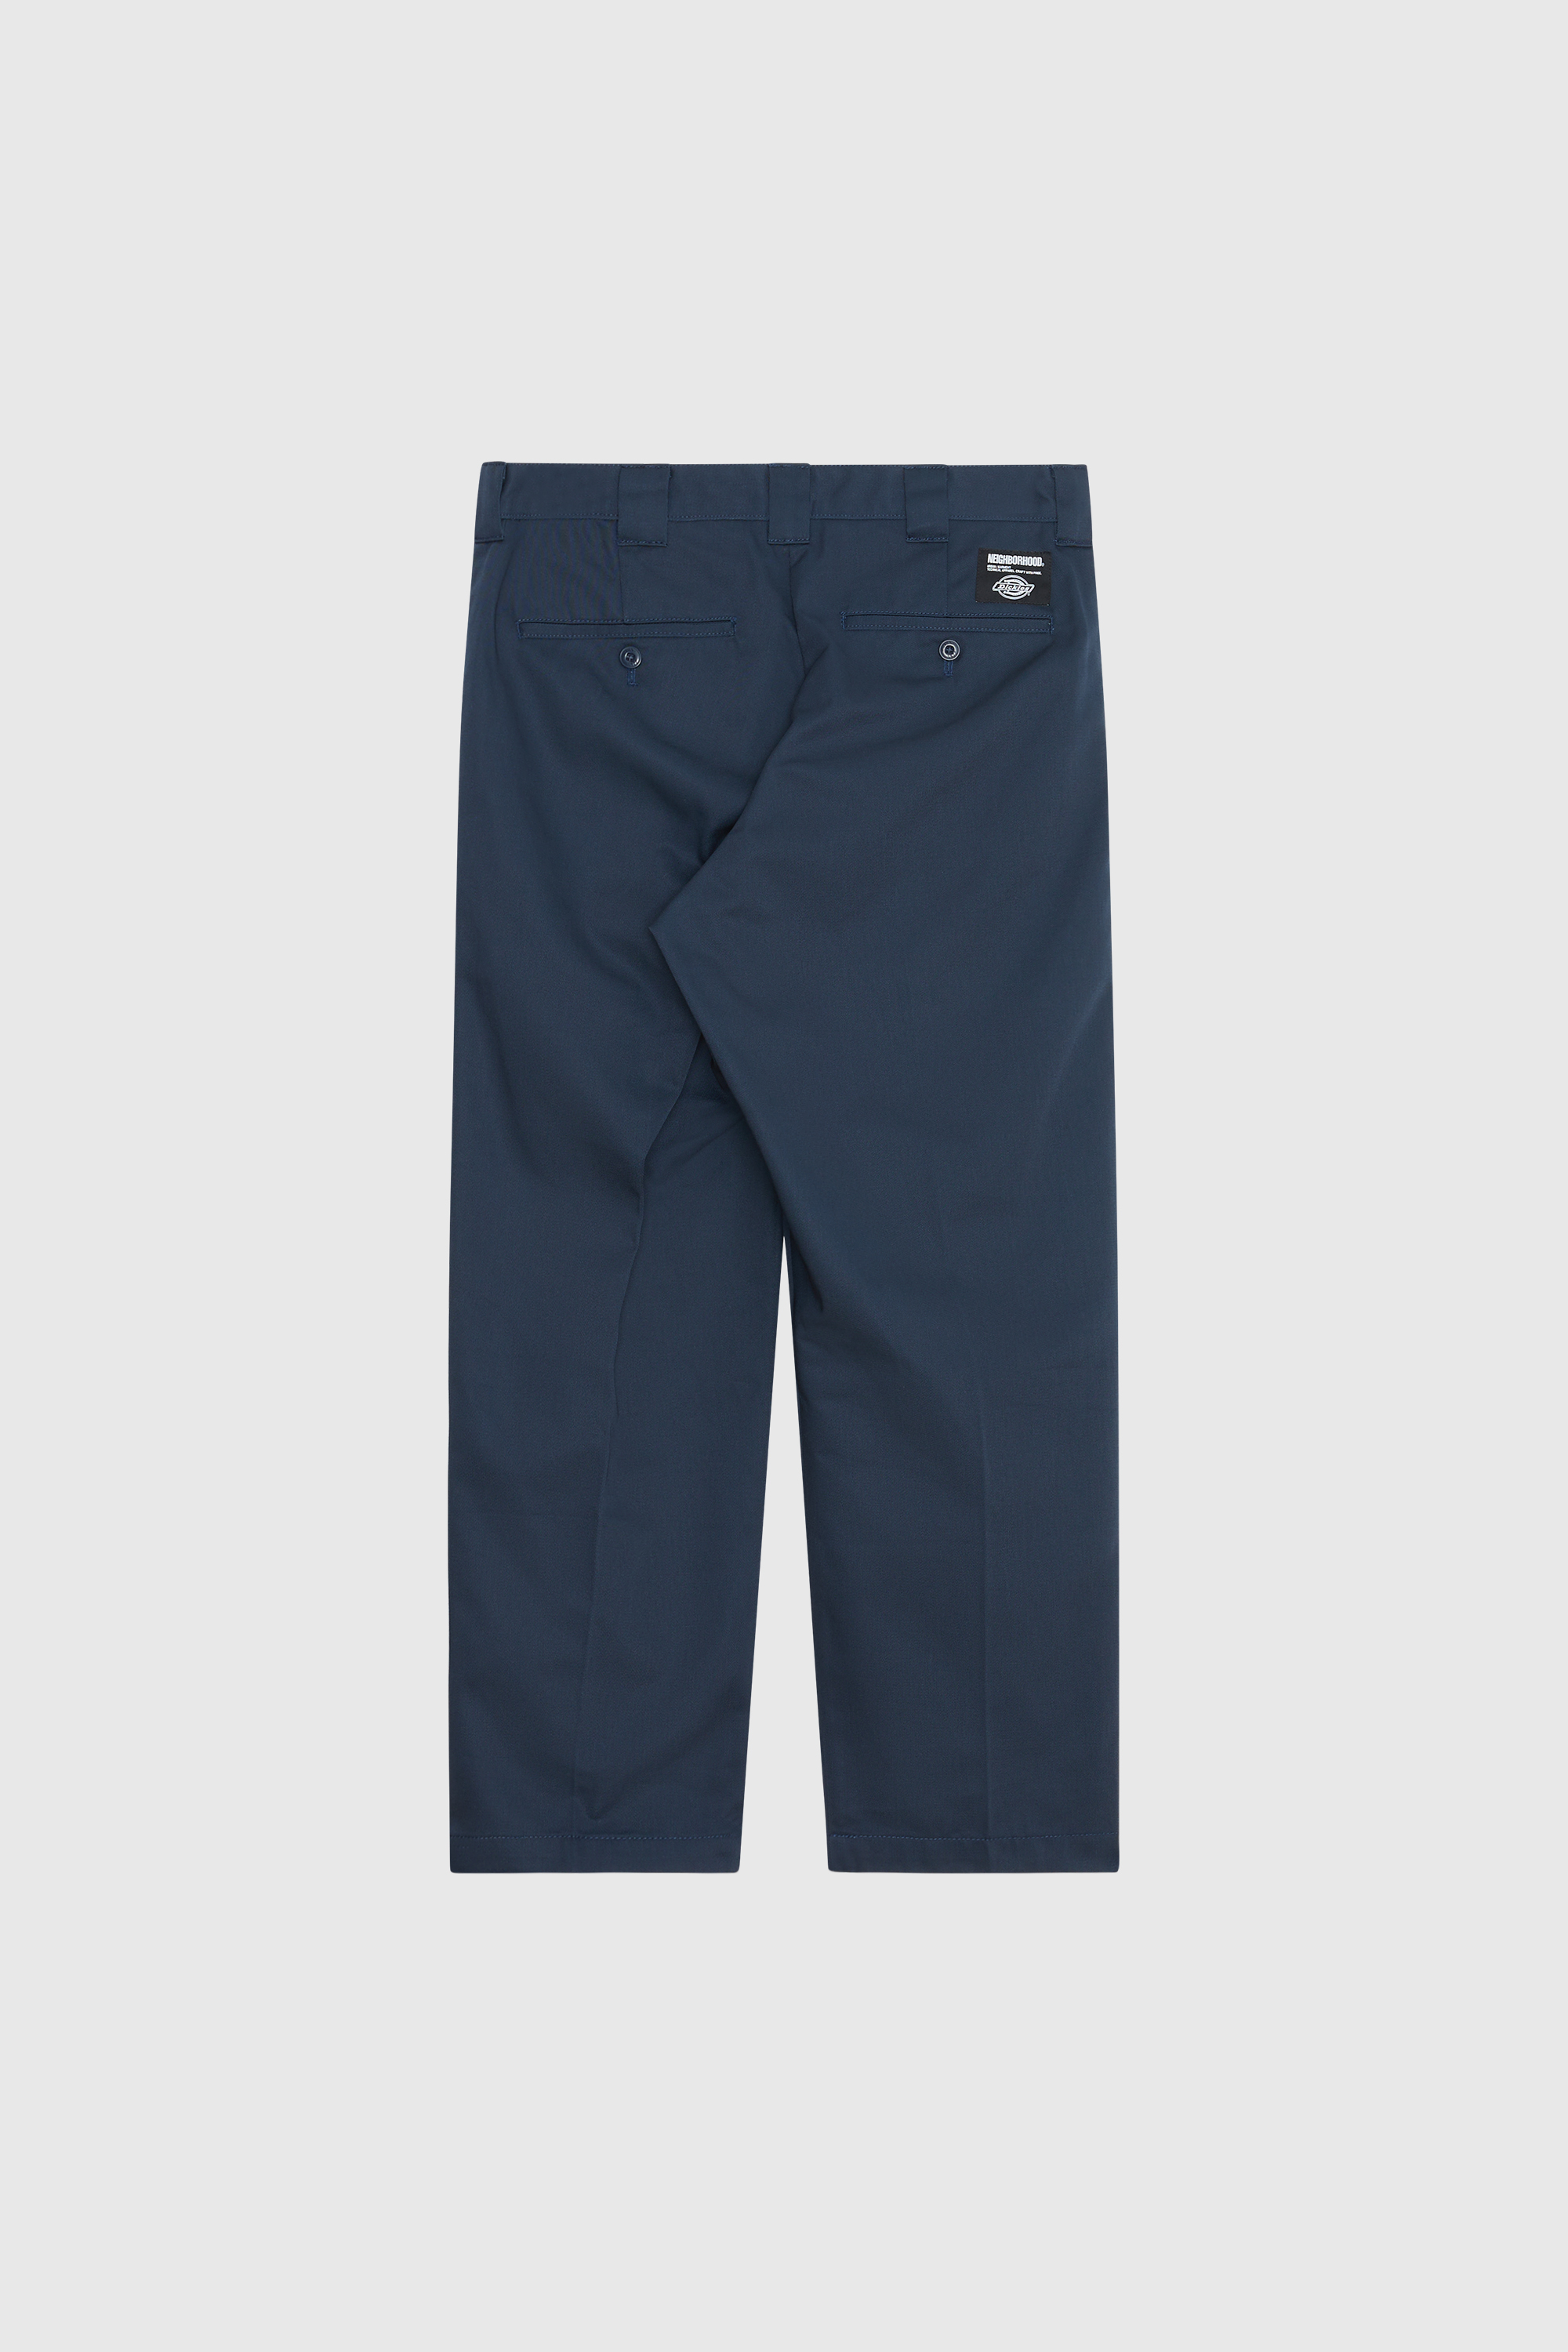 Pull-on linen trousers - Dark blue/Landscape - Ladies | H&M IN